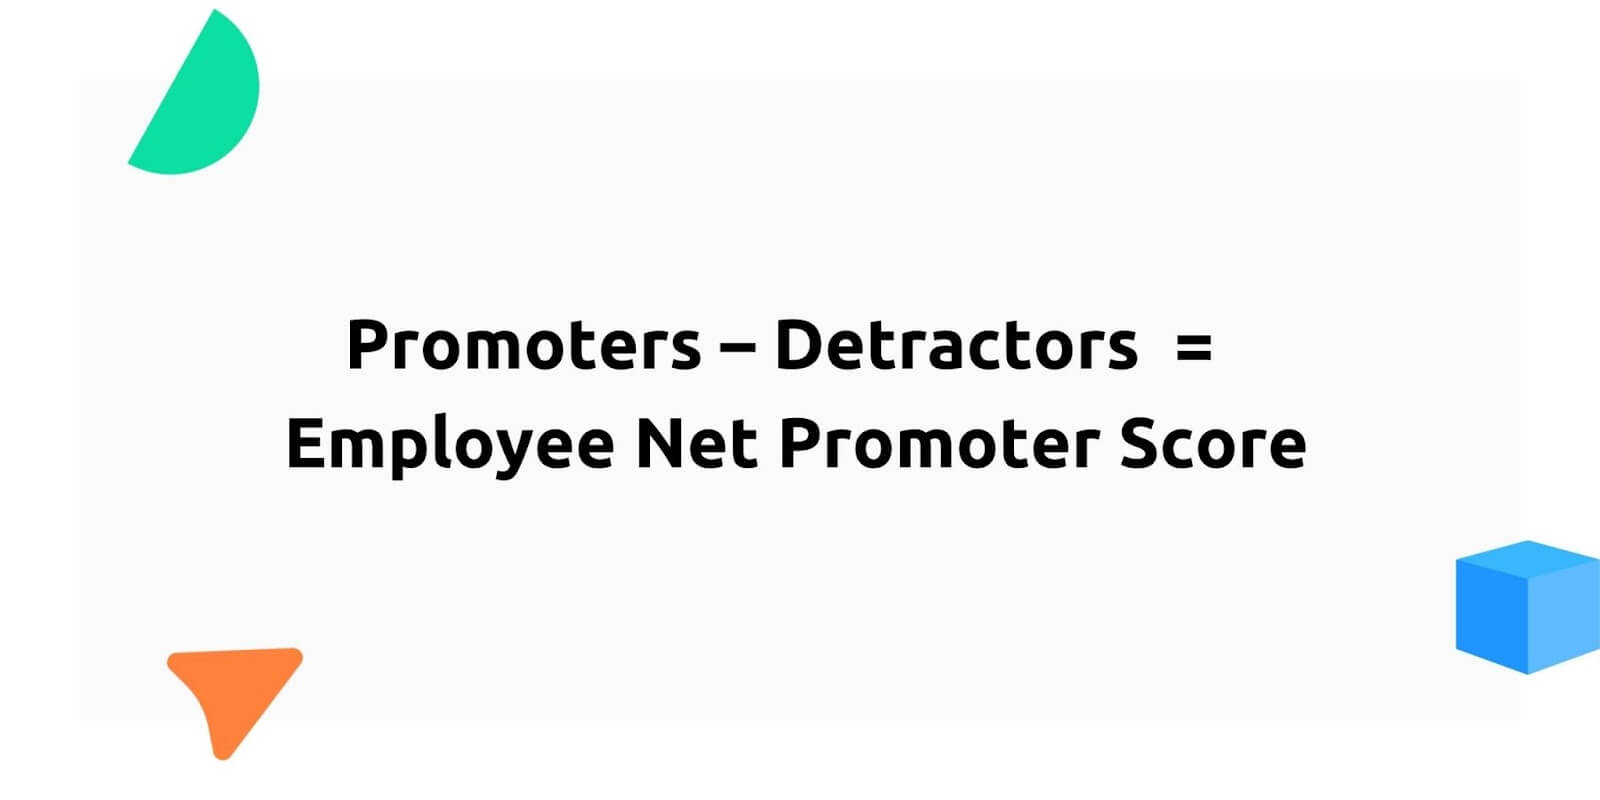 Employee Net Promoter Score formula. 

Promoters - Detractors = Employee Net Promoter Score